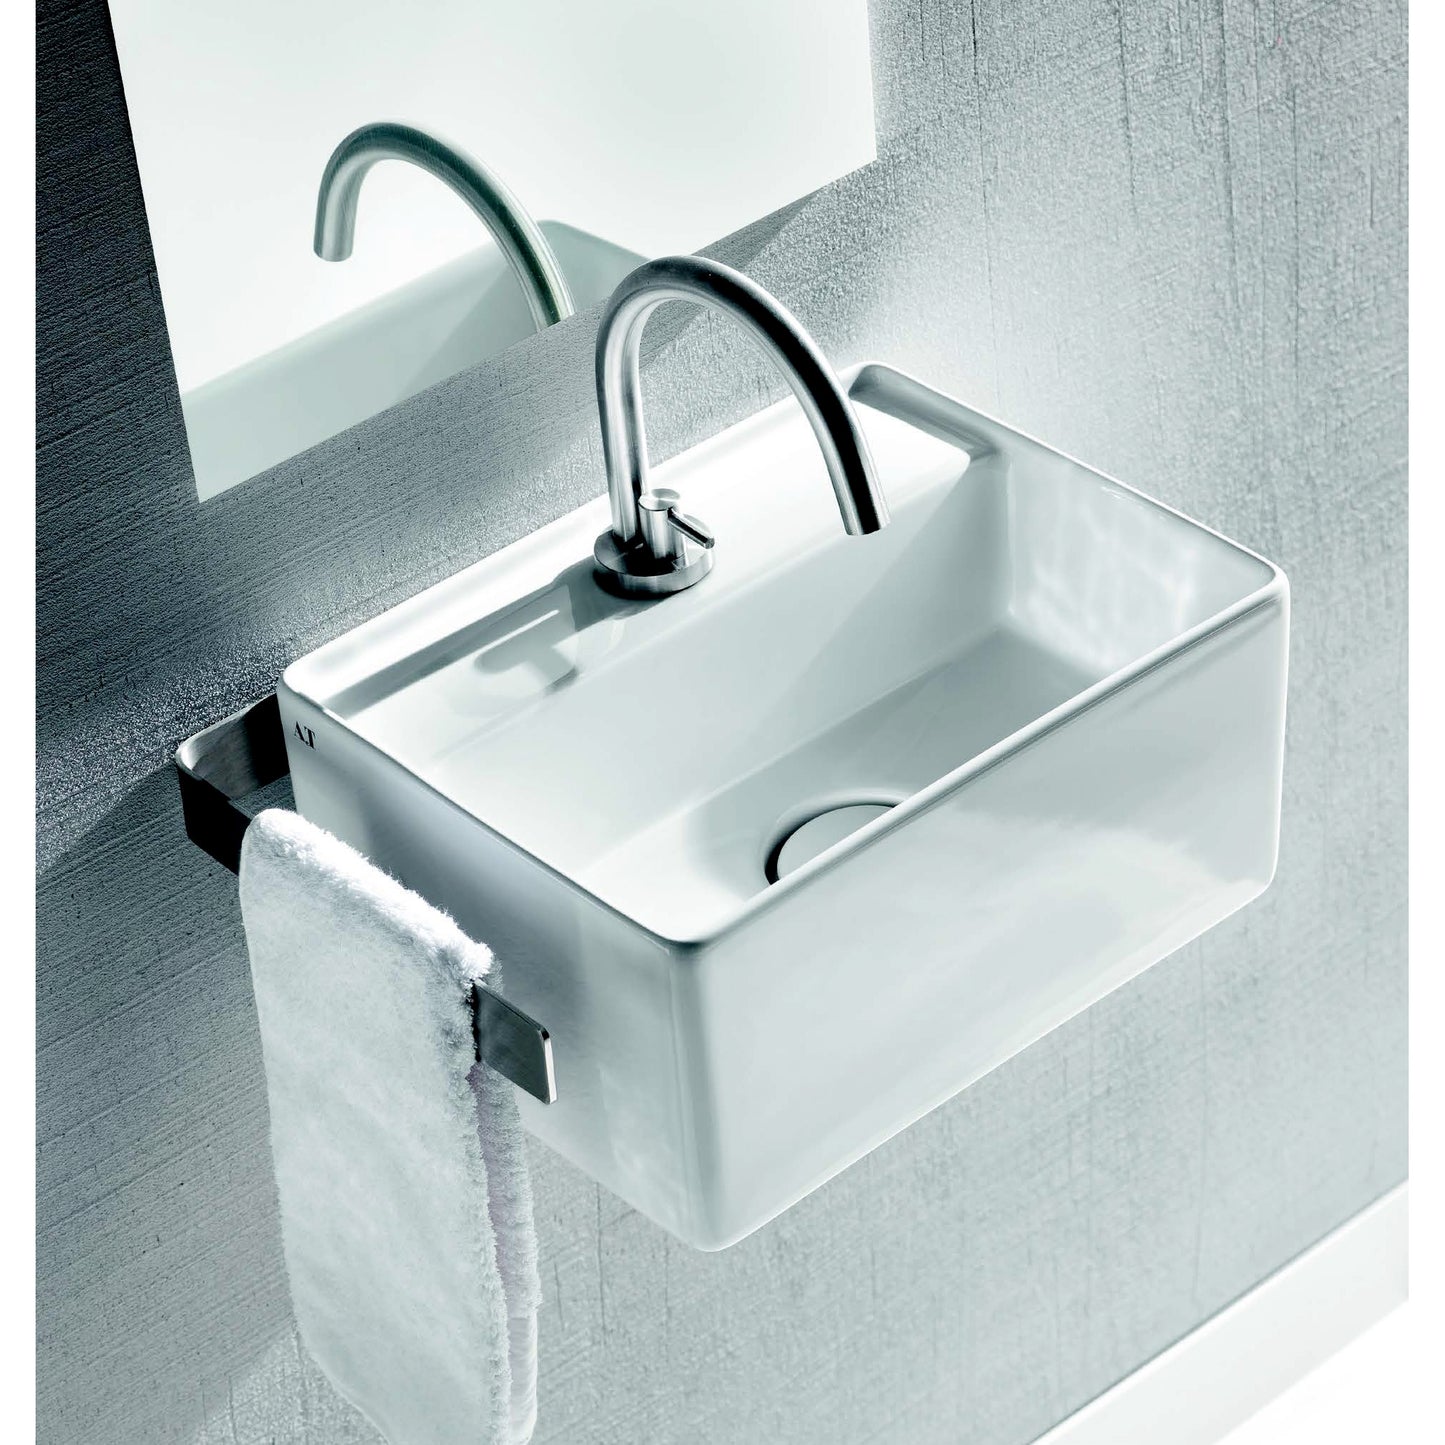 Lavabo faucet single lever Acquafredda stainless steel ACQ005